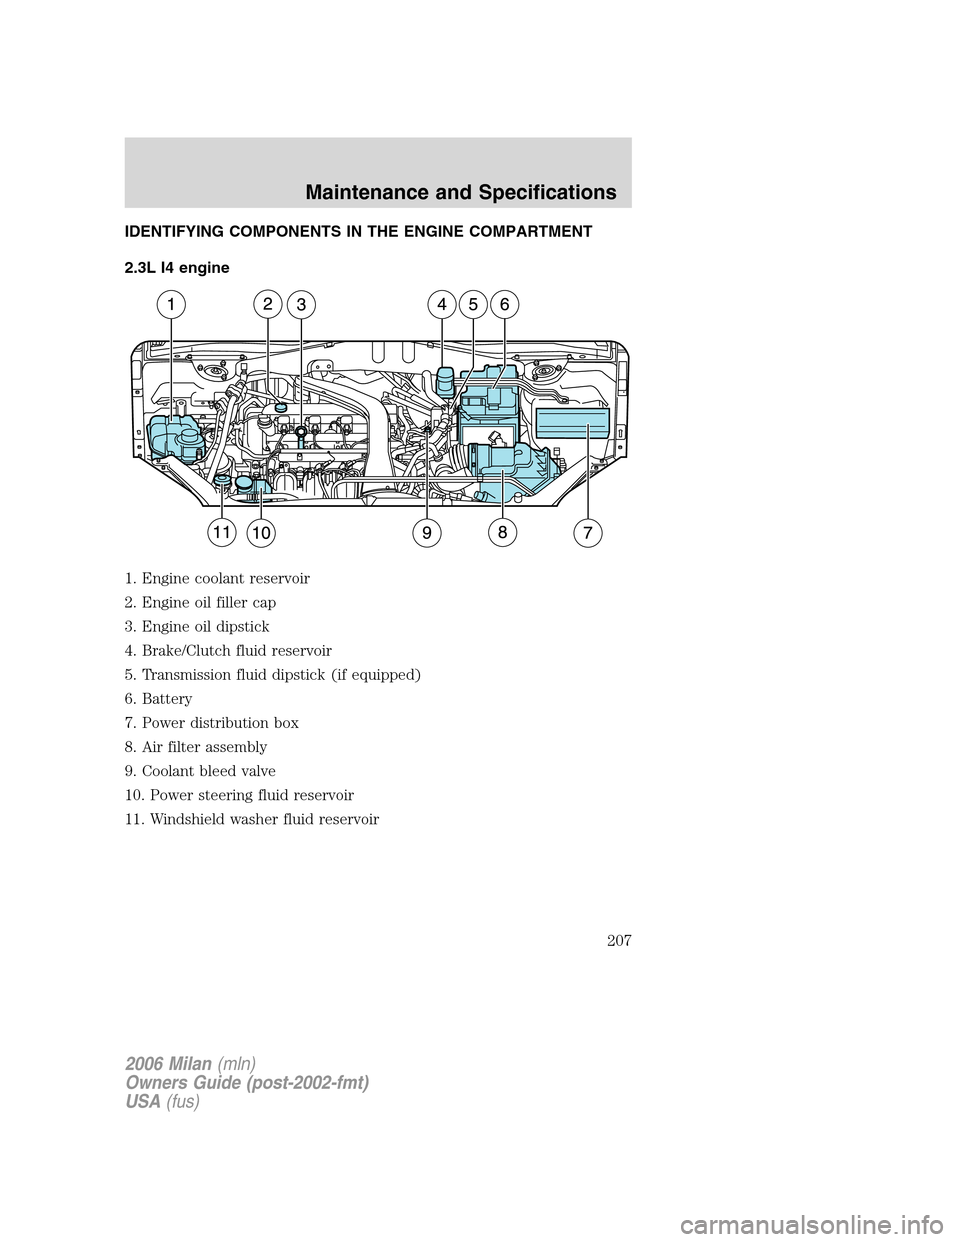 Mercury Milan 2006  Owners Manuals IDENTIFYING COMPONENTS IN THE ENGINE COMPARTMENT
2.3L I4 engine
1. Engine coolant reservoir
2. Engine oil filler cap
3. Engine oil dipstick
4. Brake/Clutch fluid reservoir
5. Transmission fluid dipsti